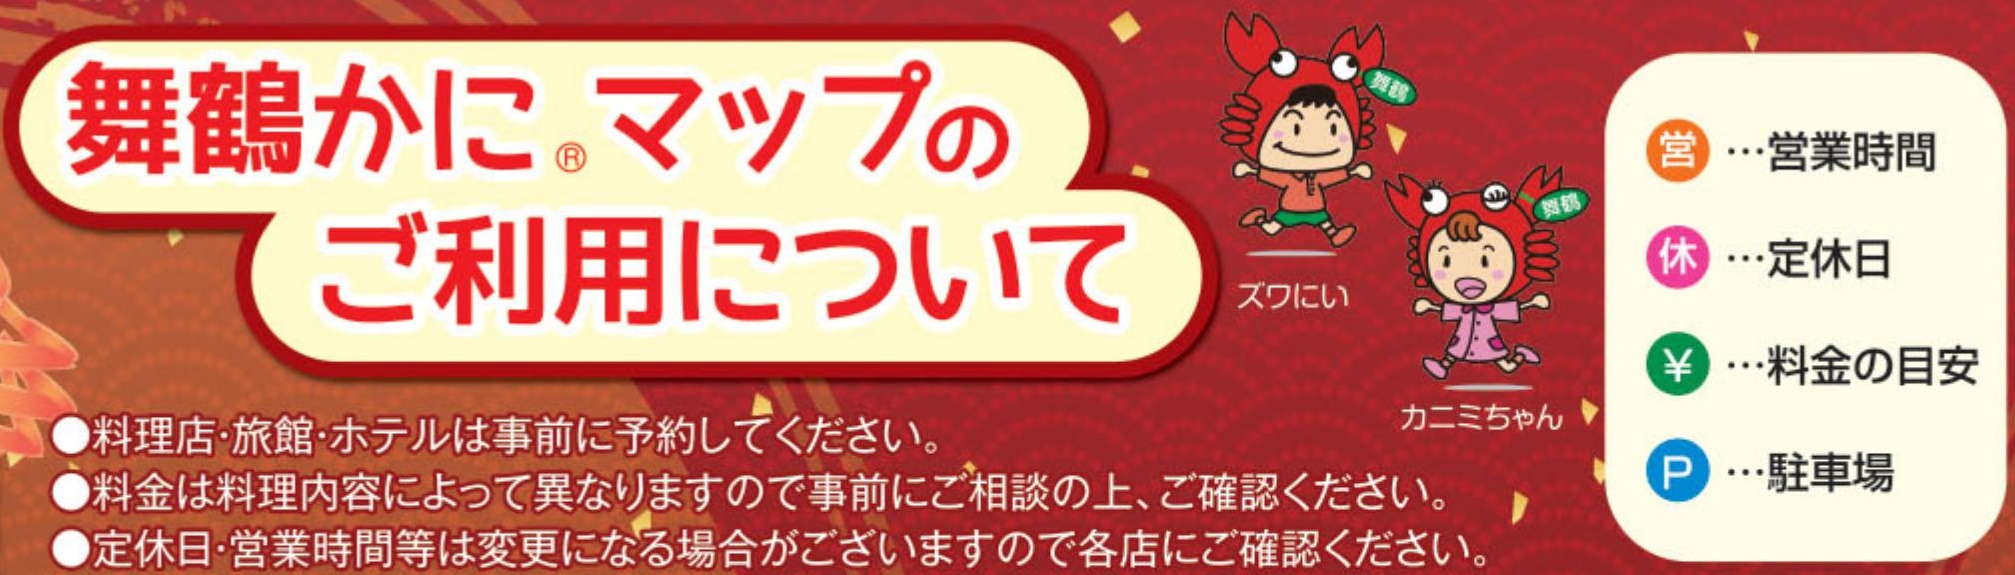 http://www.maizuru-kanko.net/event/img/%E8%AA%AC%E6%98%8E.jpg